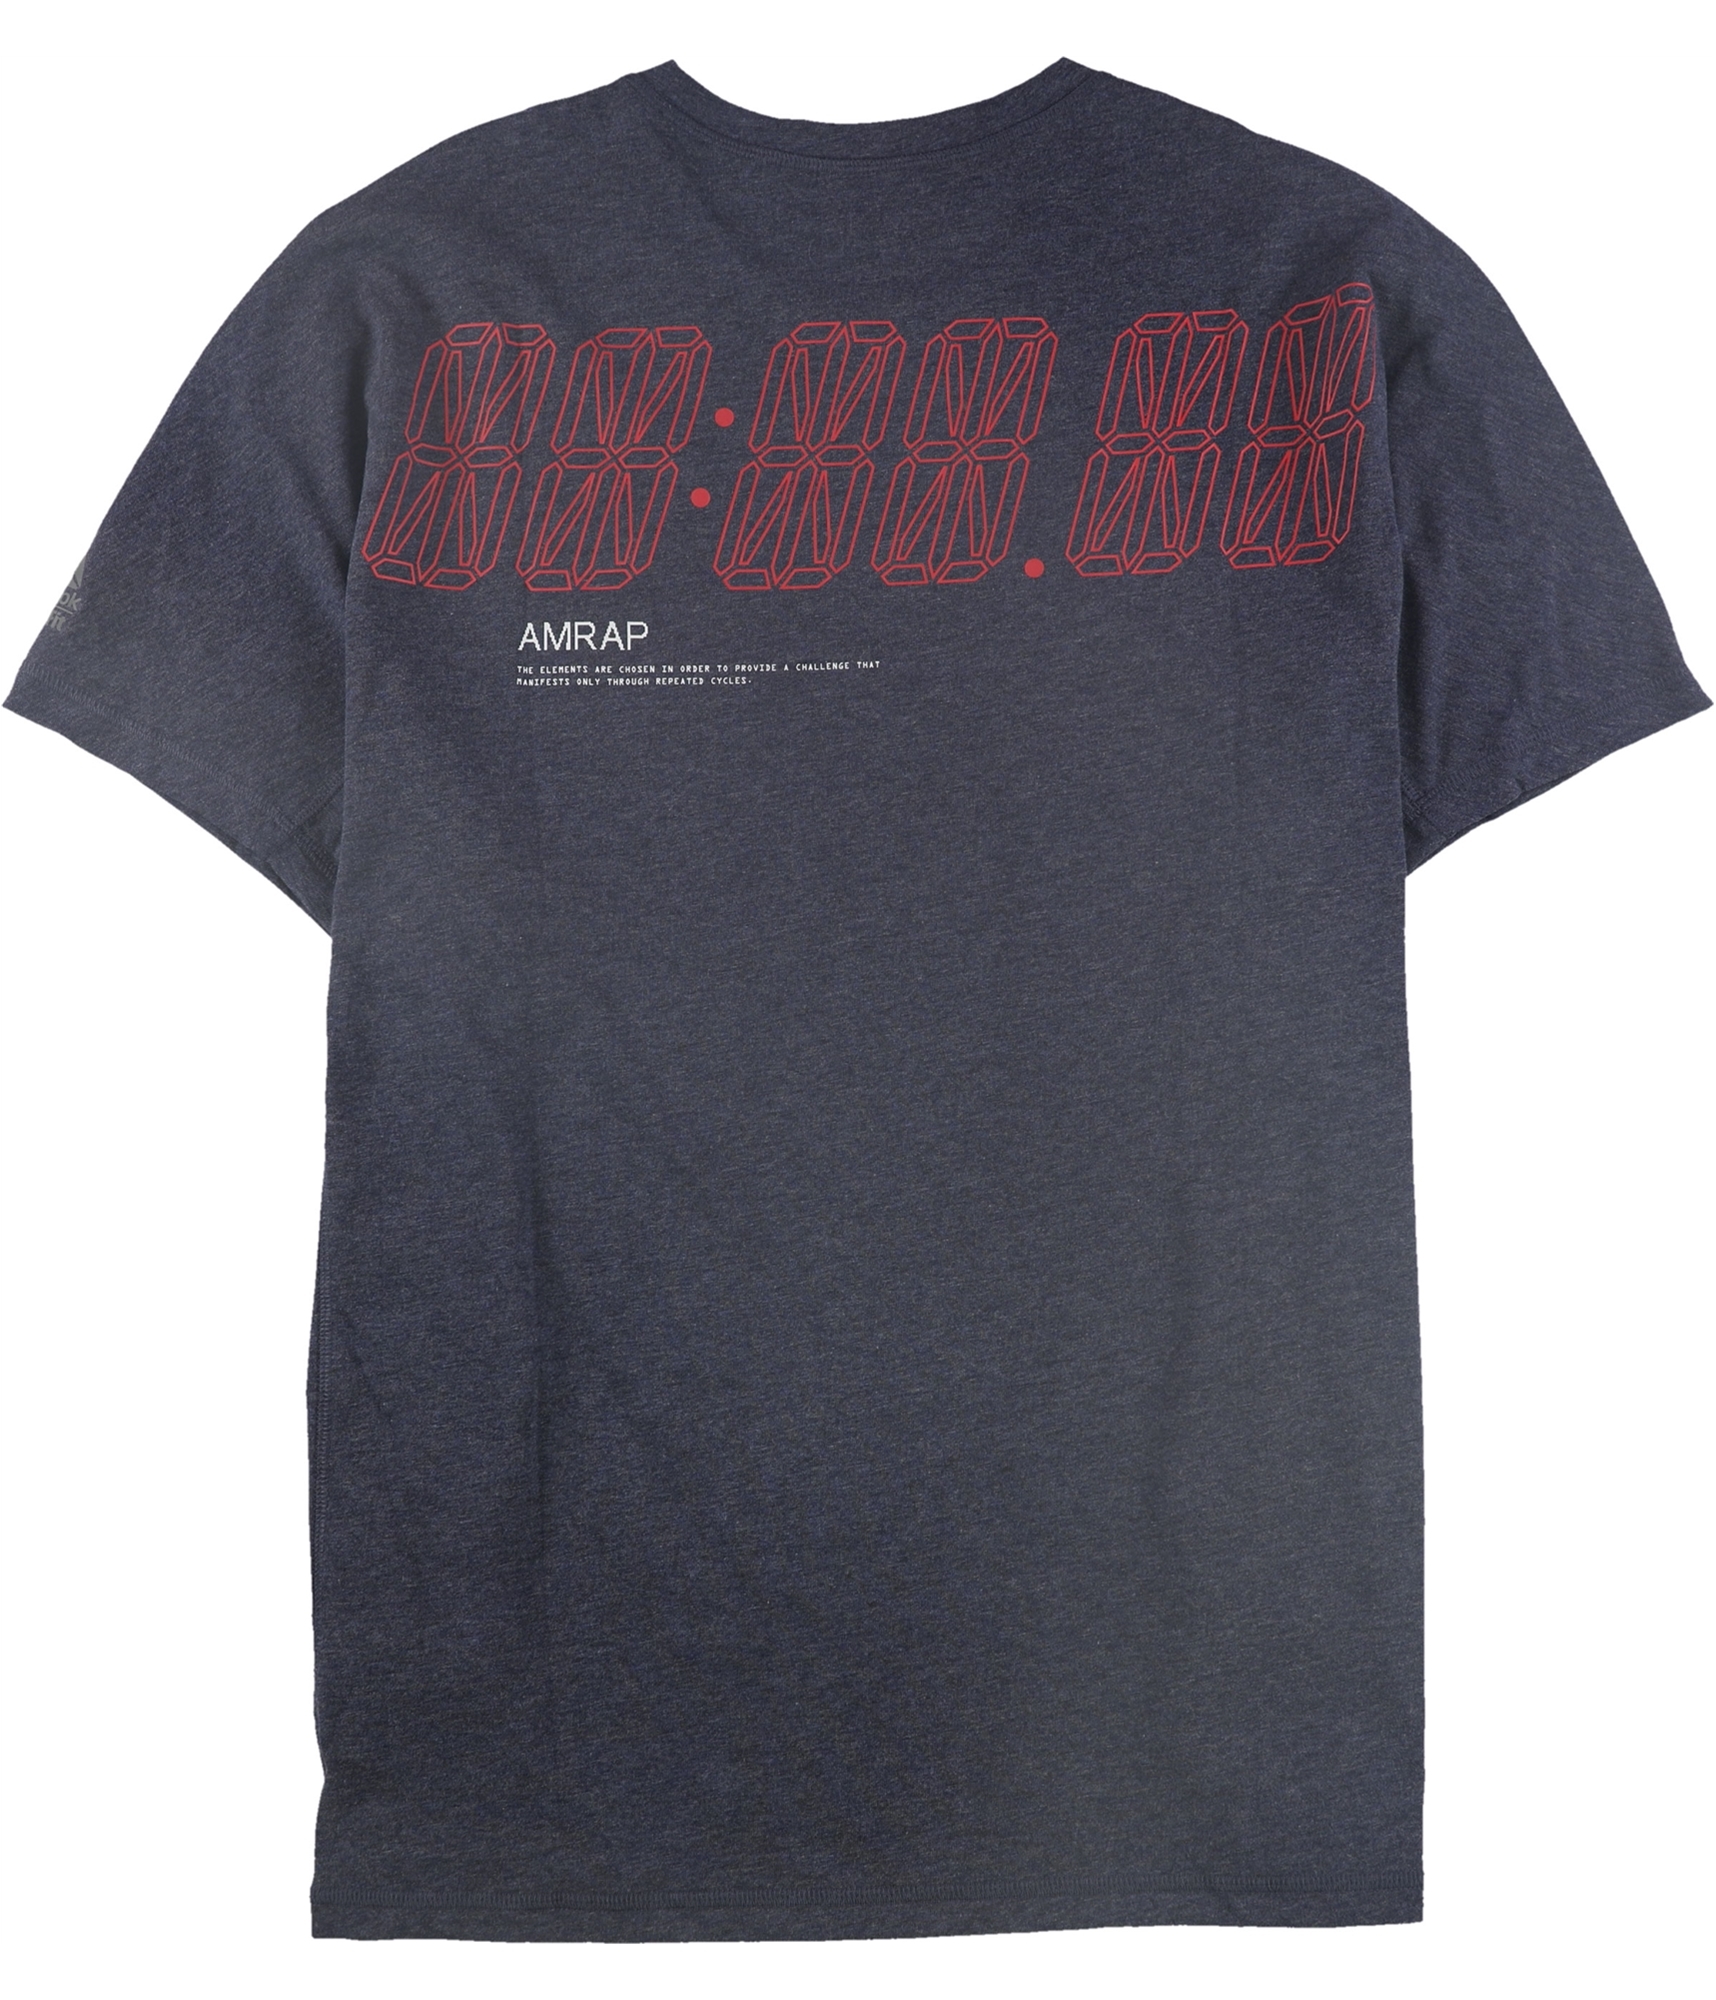 Buy Mens Reebok CrossFit Graphic T-Shirt TagsWeekly.com, TW12